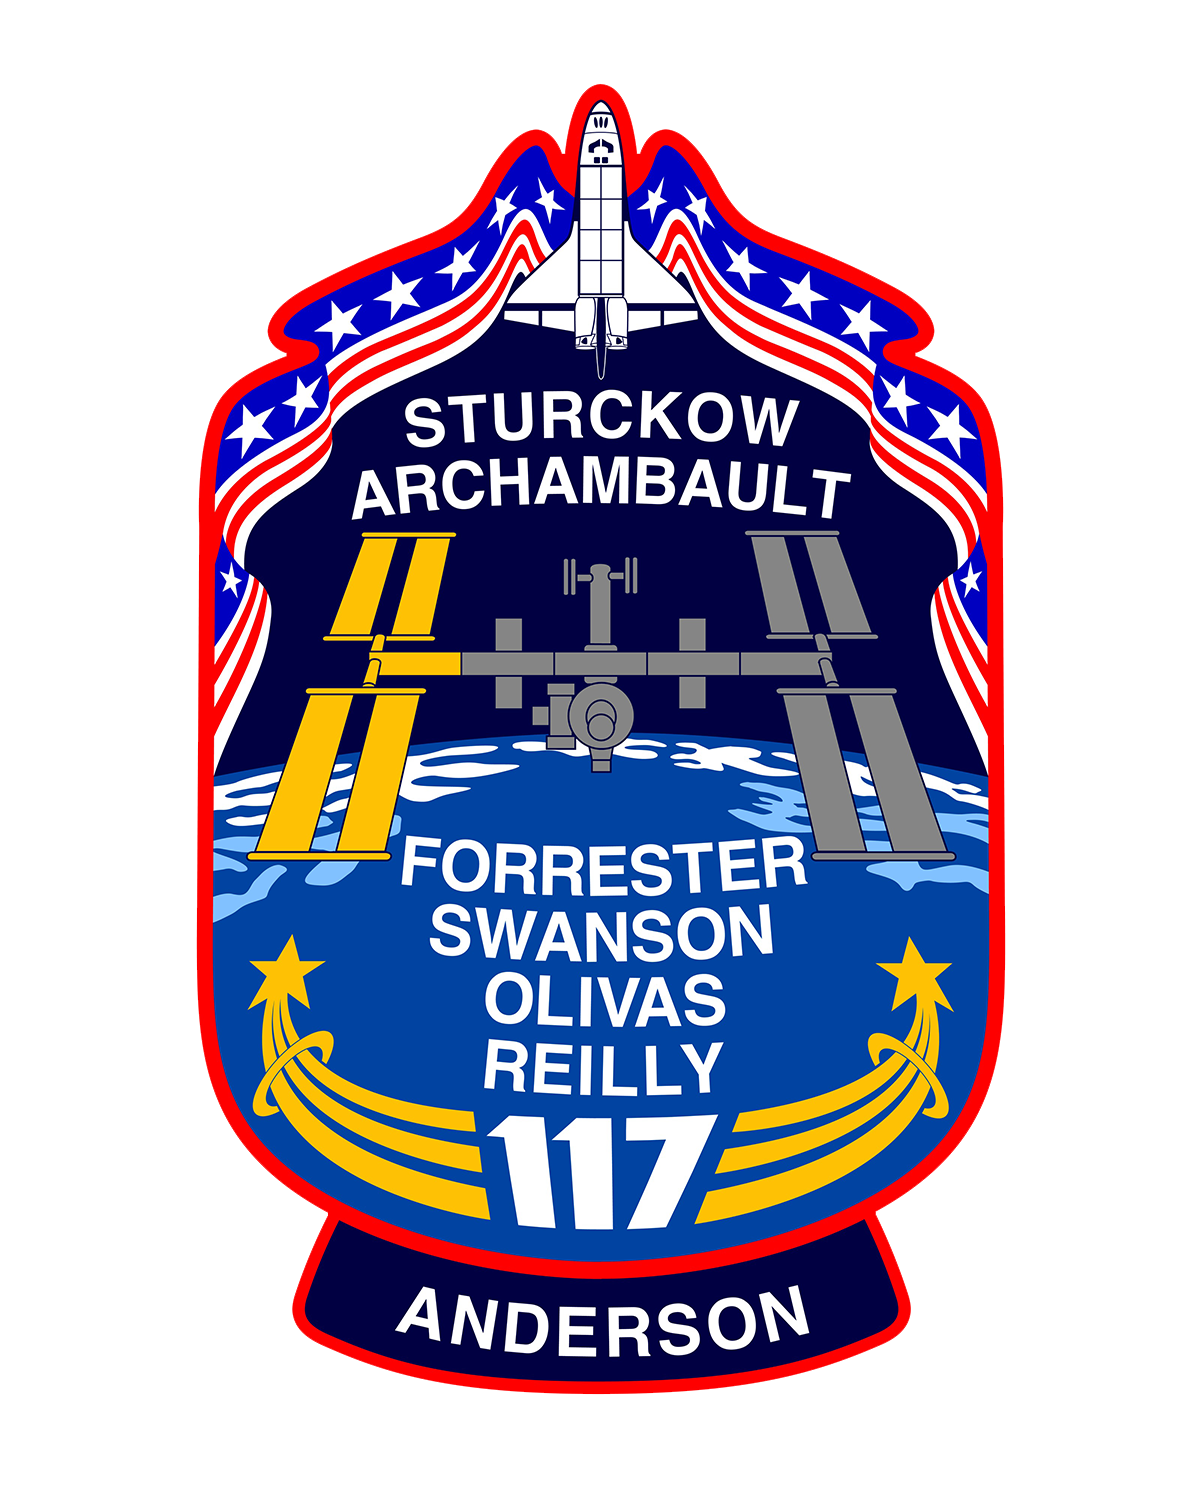 STS-117 (Atlantis)